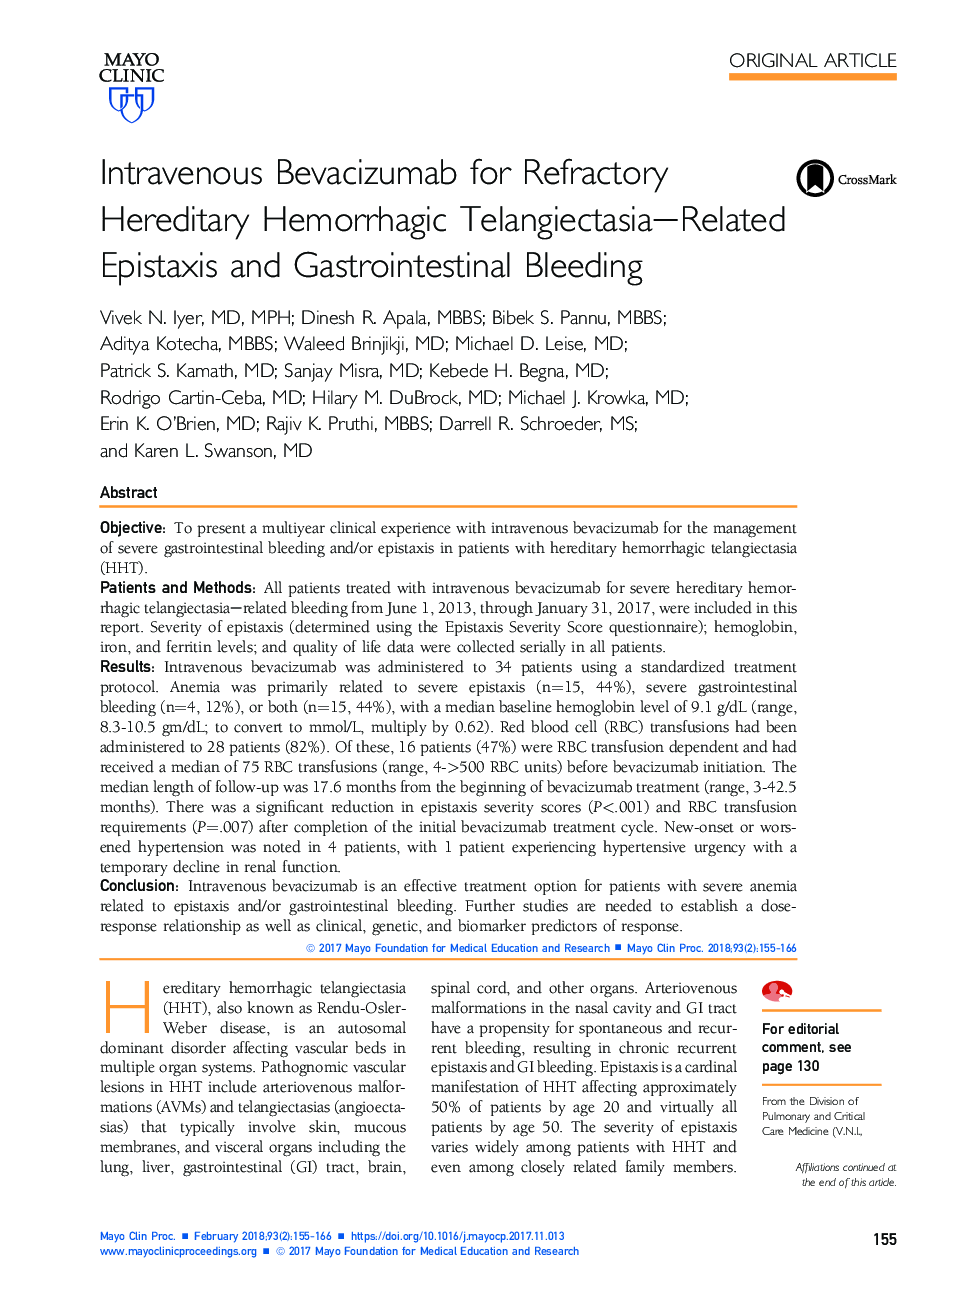 Intravenous Bevacizumab for Refractory Hereditary Hemorrhagic Telangiectasia-Related Epistaxis and Gastrointestinal Bleeding